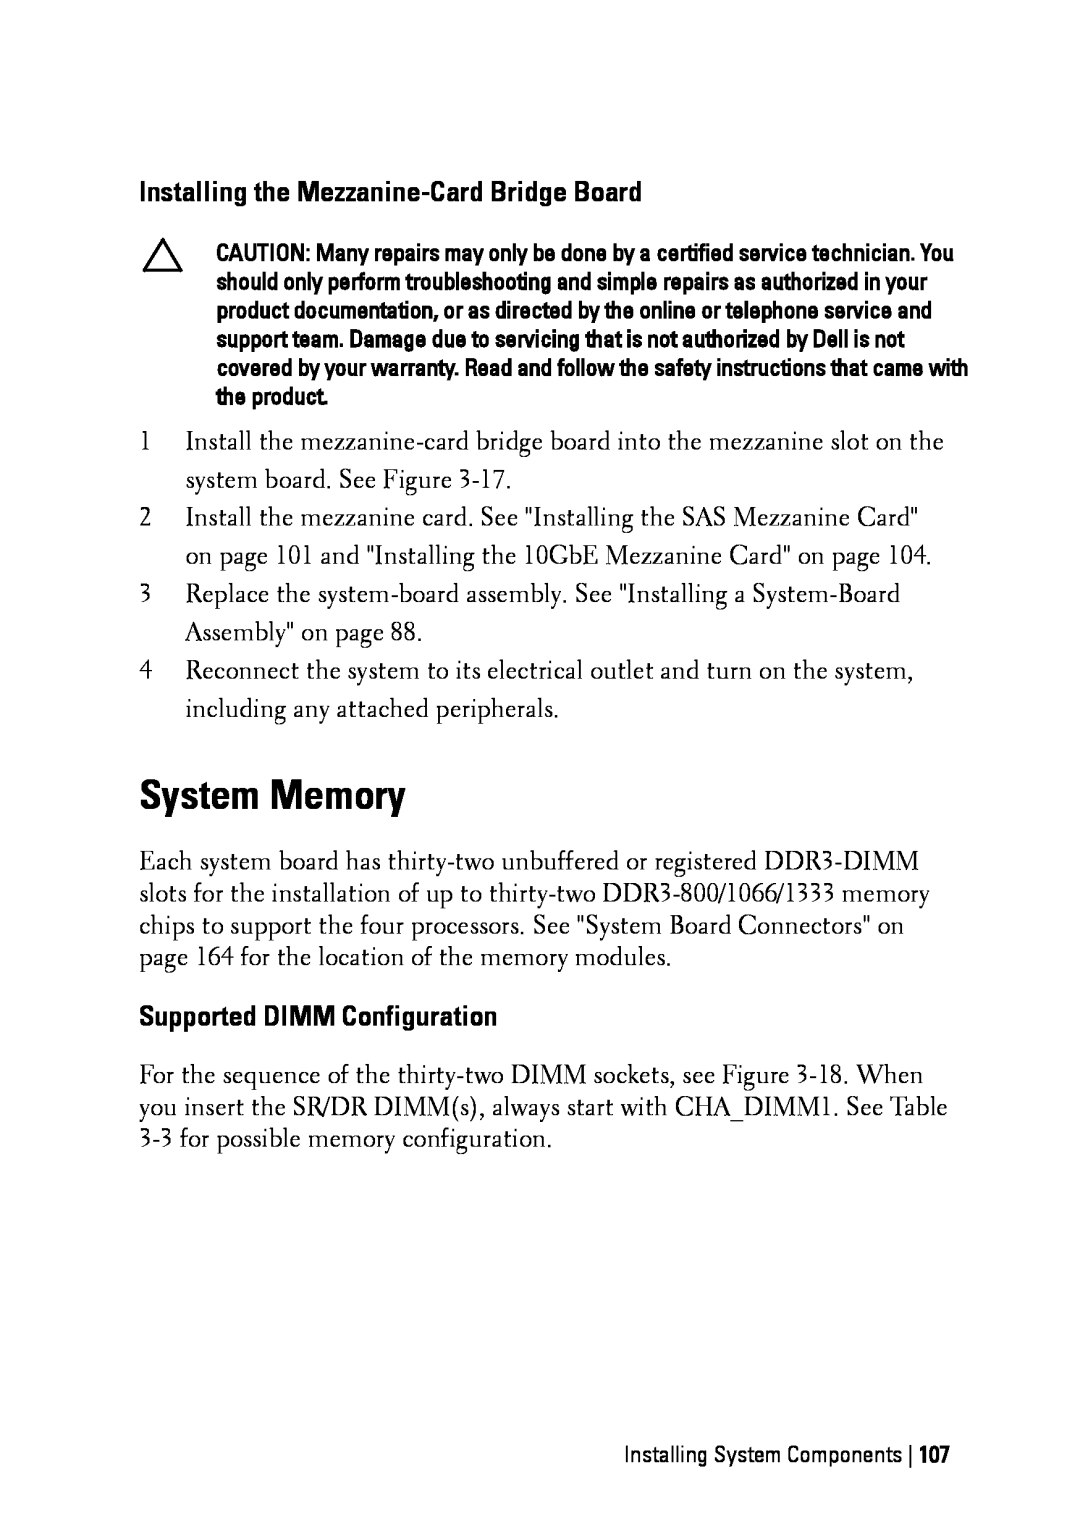 Dell C6145 manual System Memory, Installing the Mezzanine-Card Bridge Board, Supported DIMM Configuration 